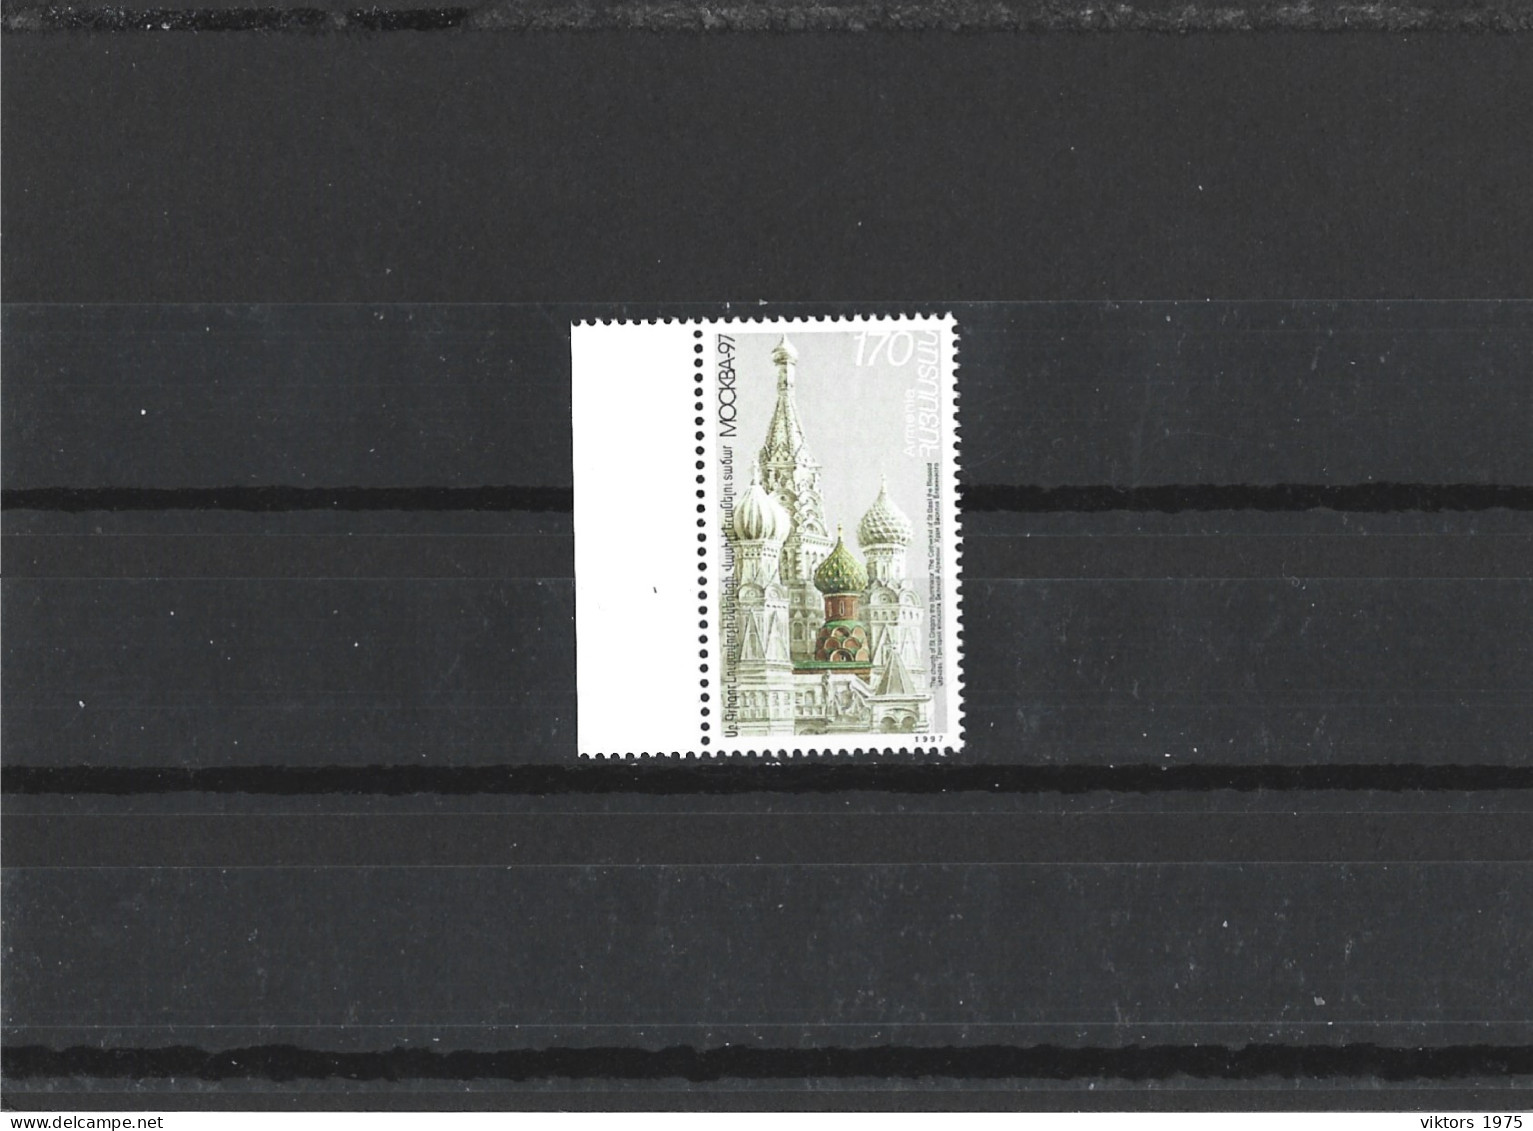 MNH Stamp Nr.316 Im MICHEL Catalog - Armenia